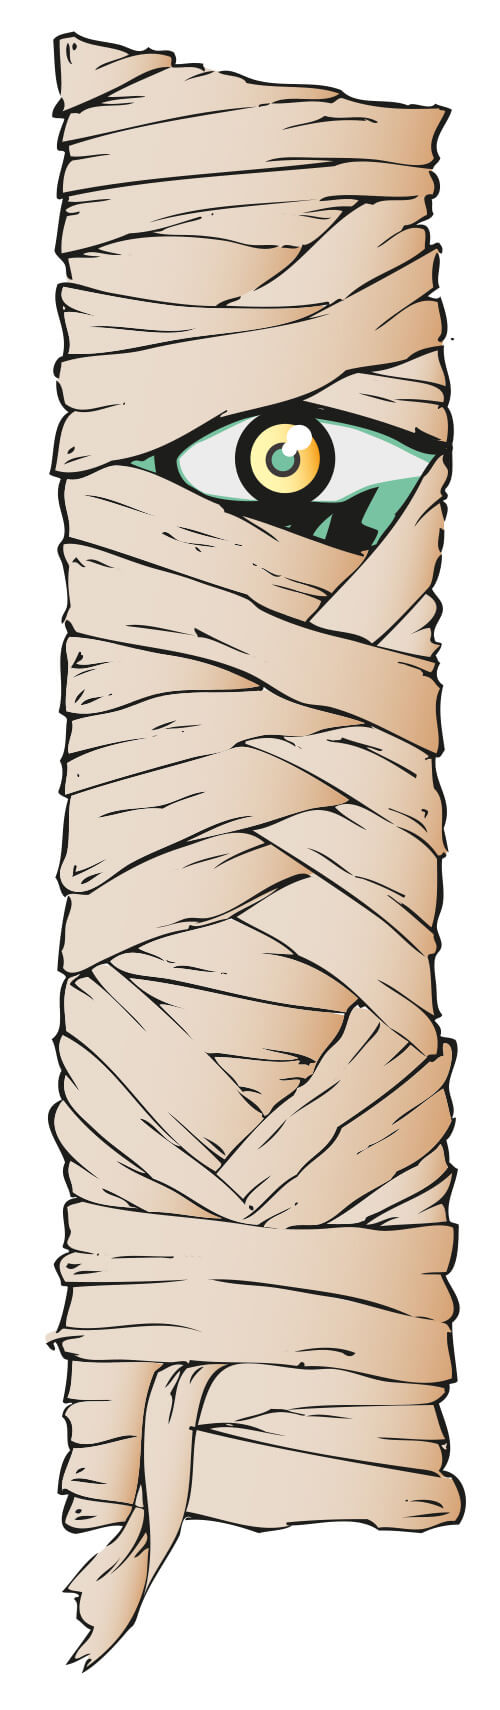 Illustration mummy